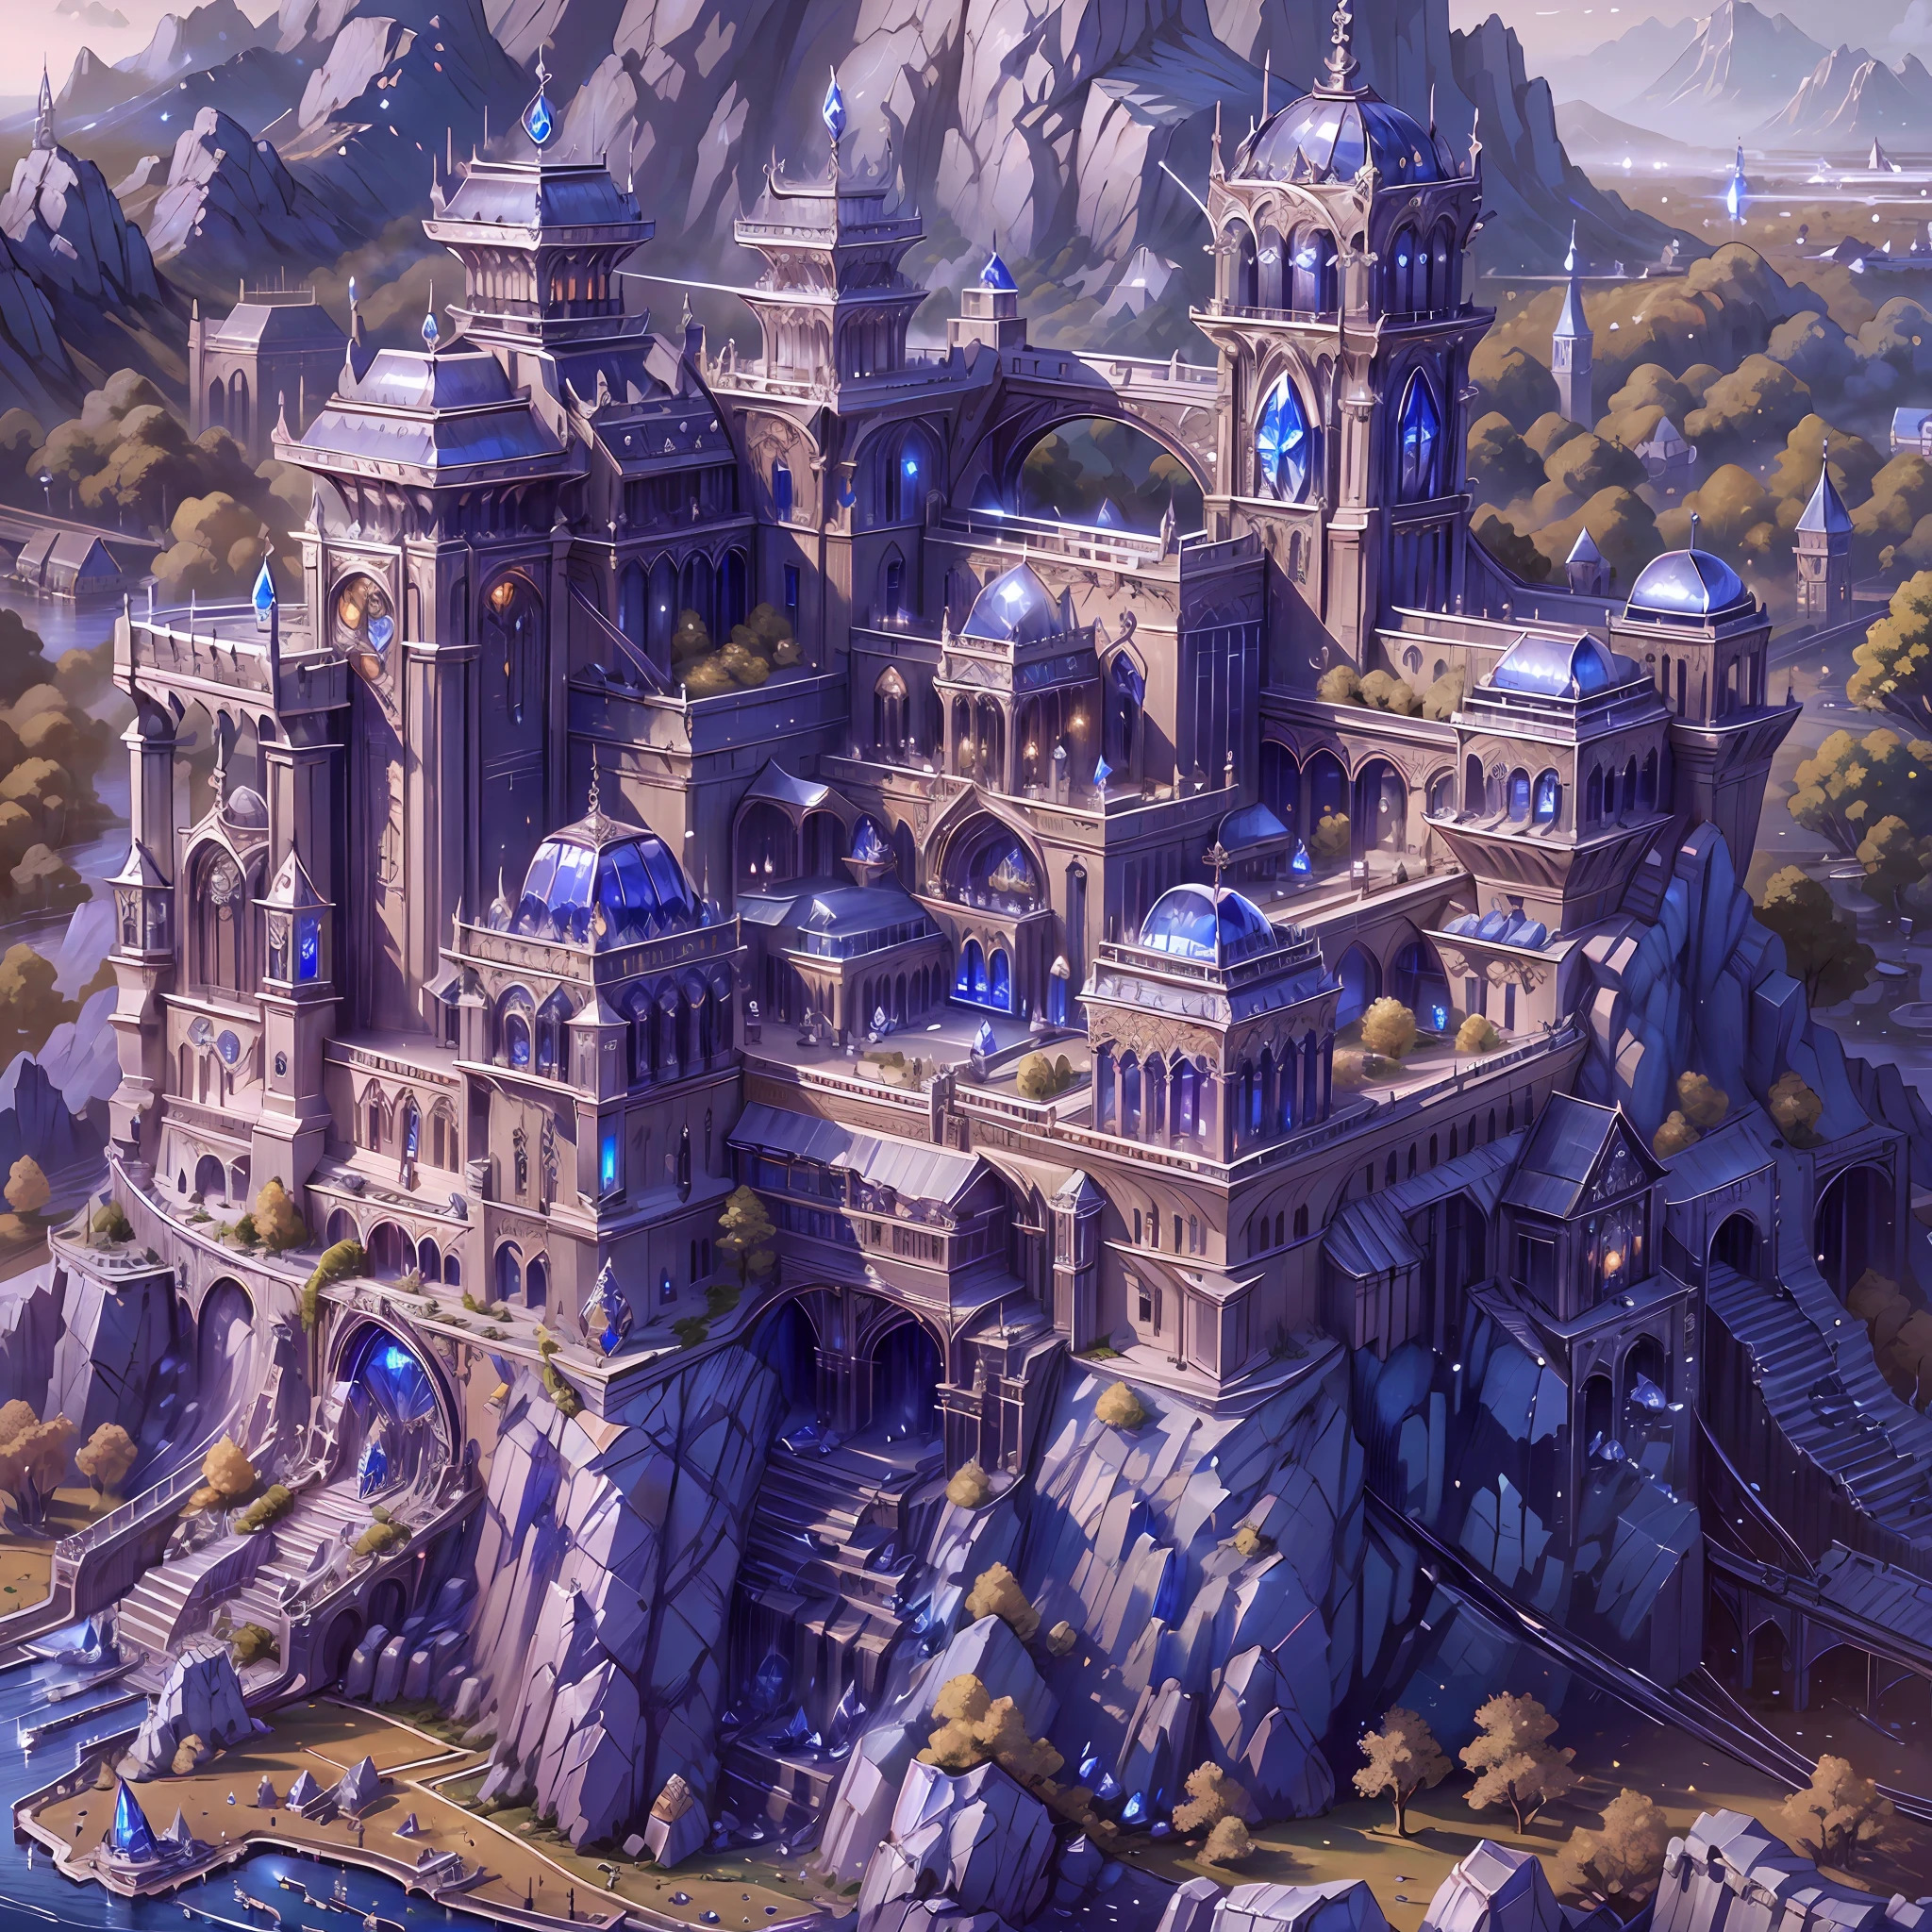 SilverSapphireAI
fortress  , detailed, intricate